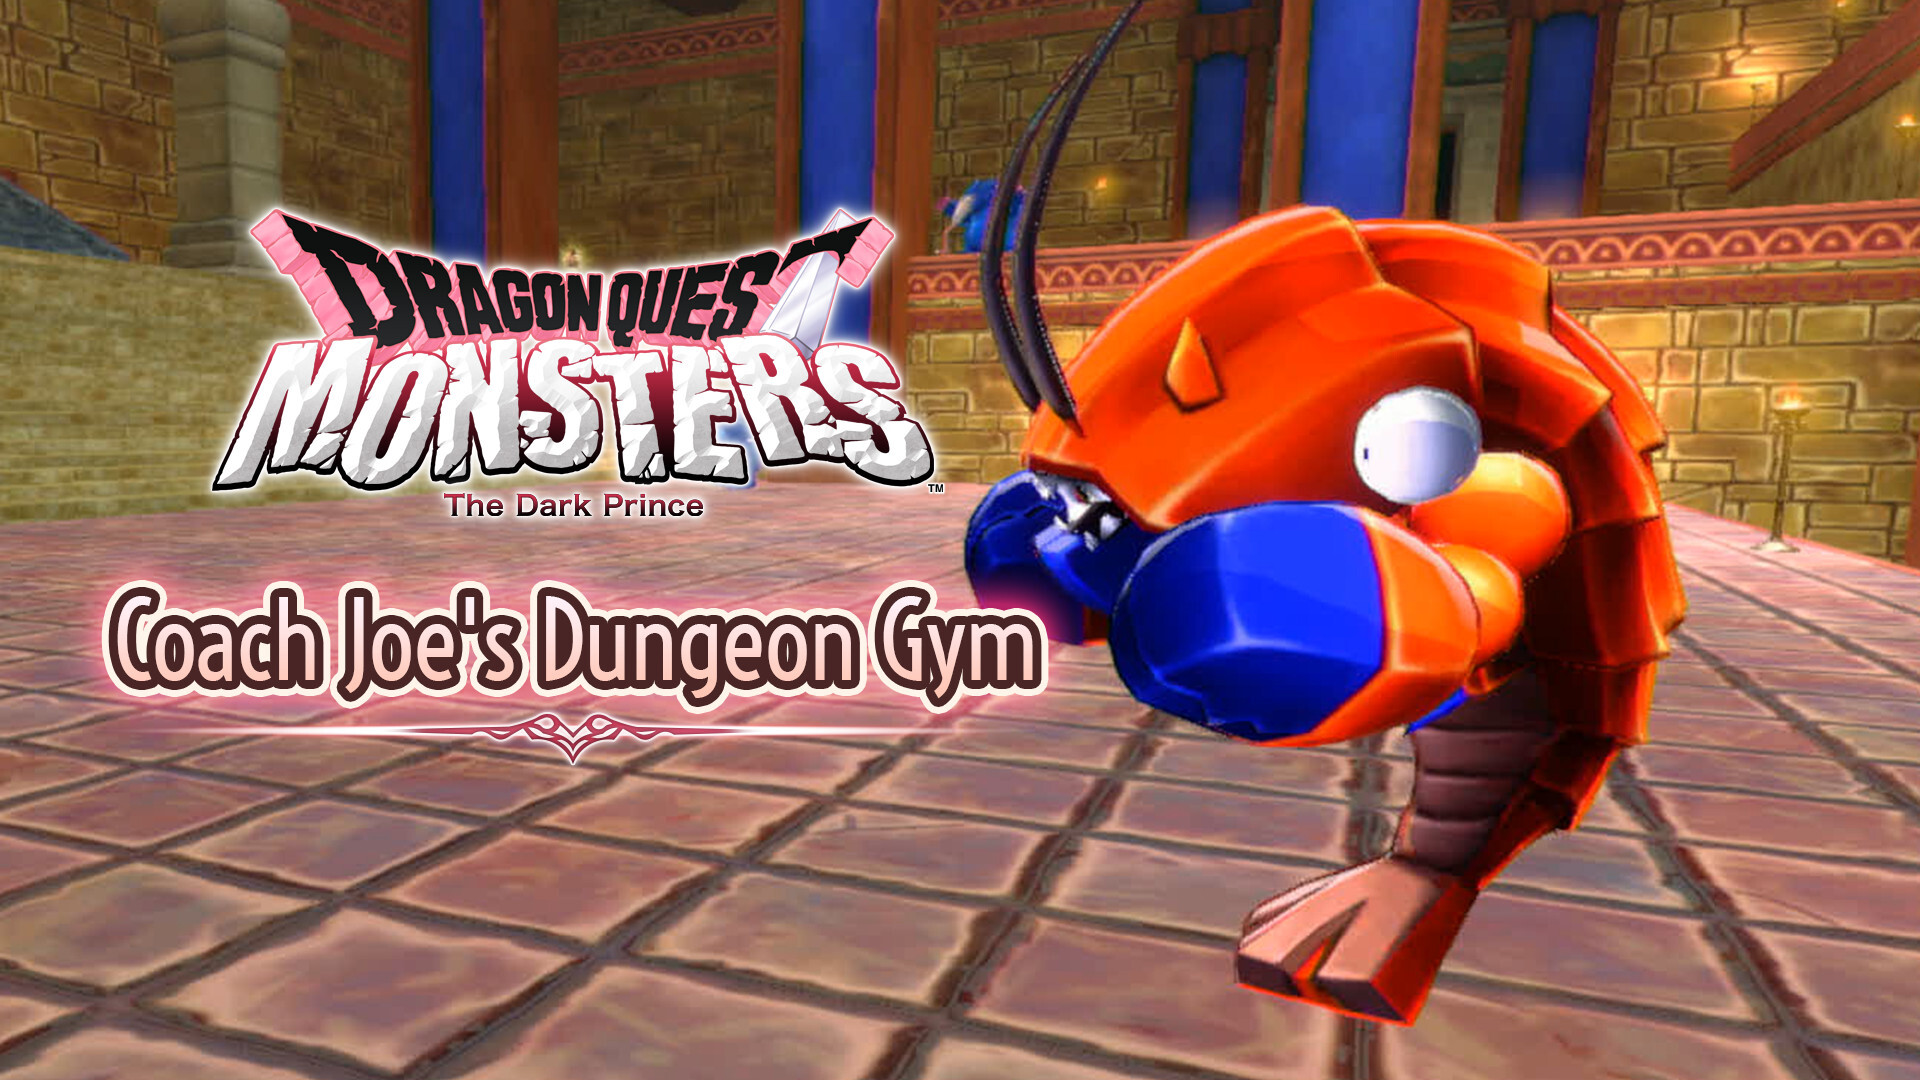 Quest - Dungeon Coach - Metacritic The Prince Dragon Monsters: Gym Dark Joe\'s